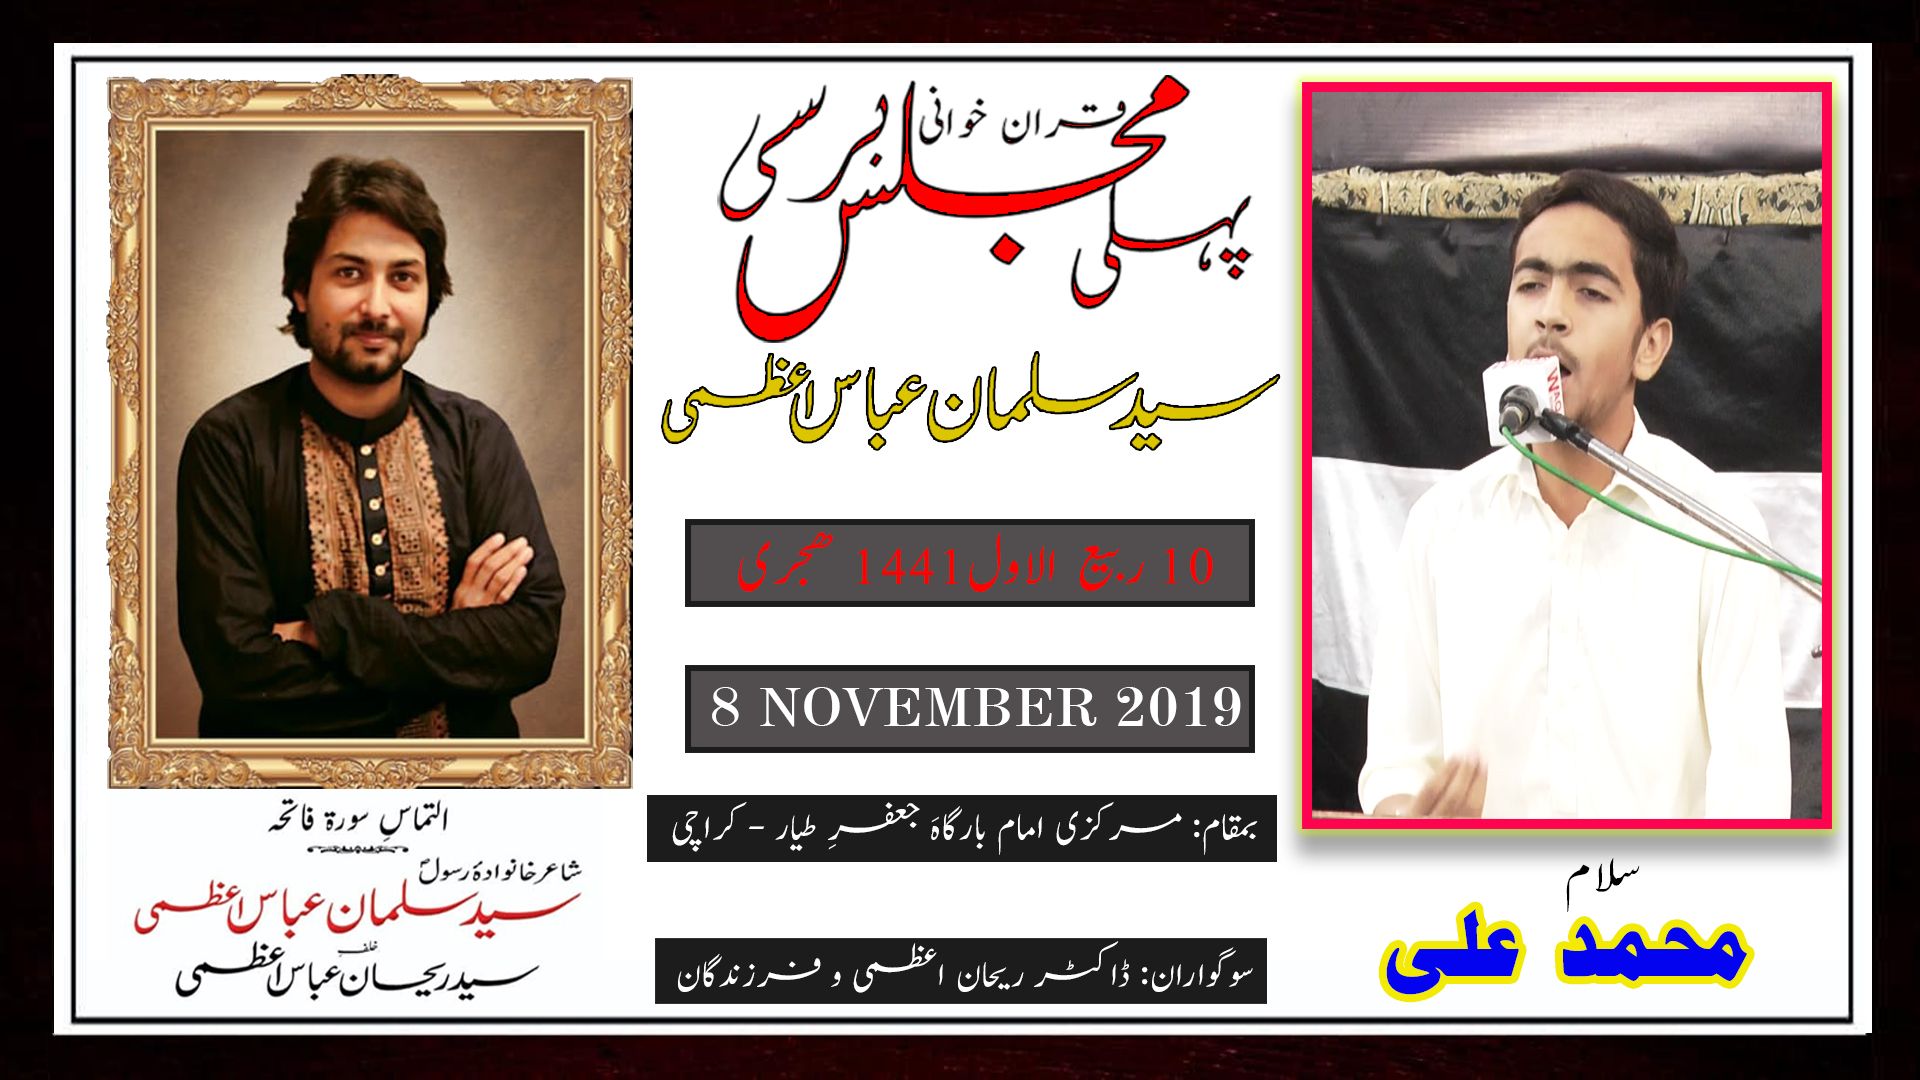 Salam | Muhammad Ali | Majlis-e-Barsi Salman Azmi - Markazi Imam Bargah Malir - Karachi